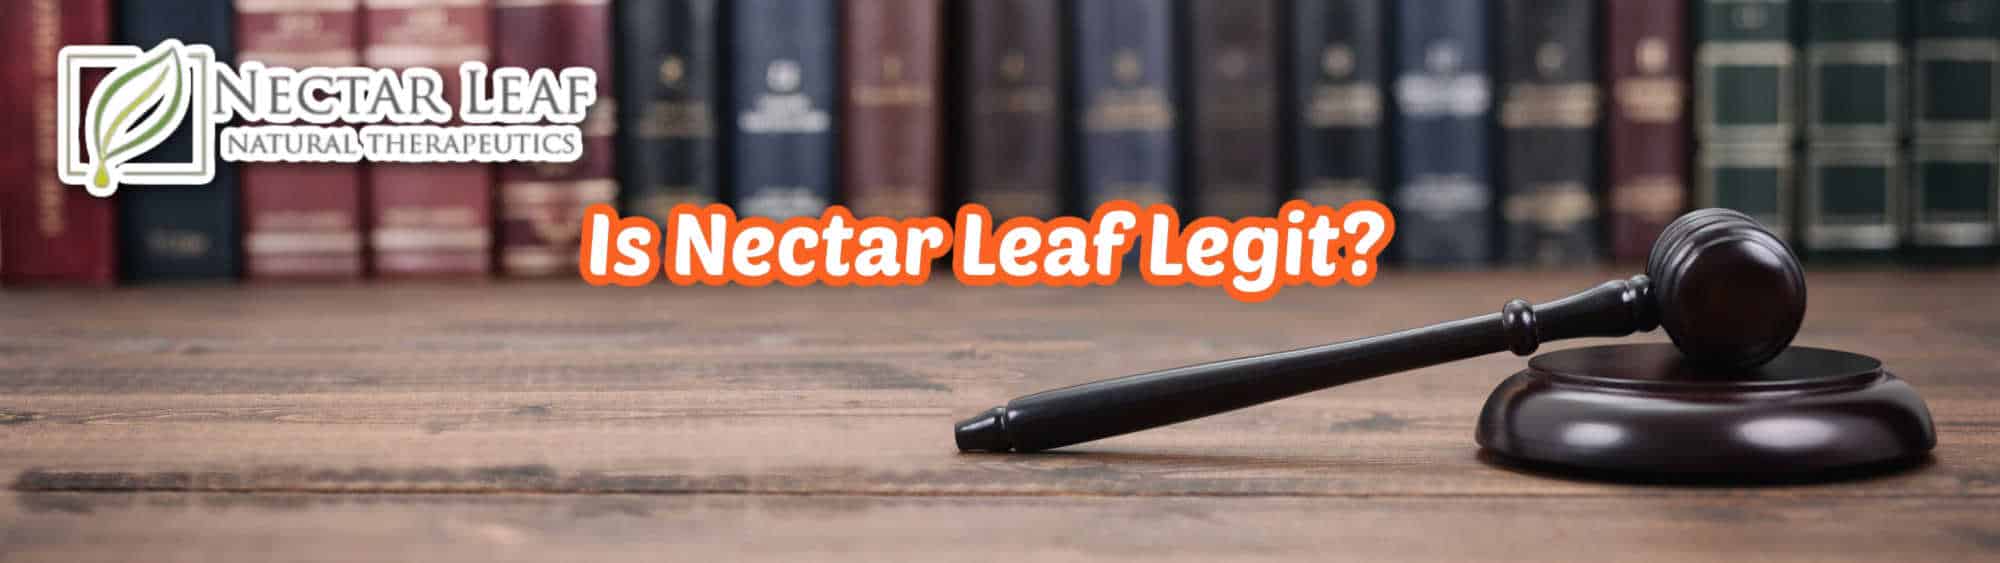 image of is nectar leaf legit